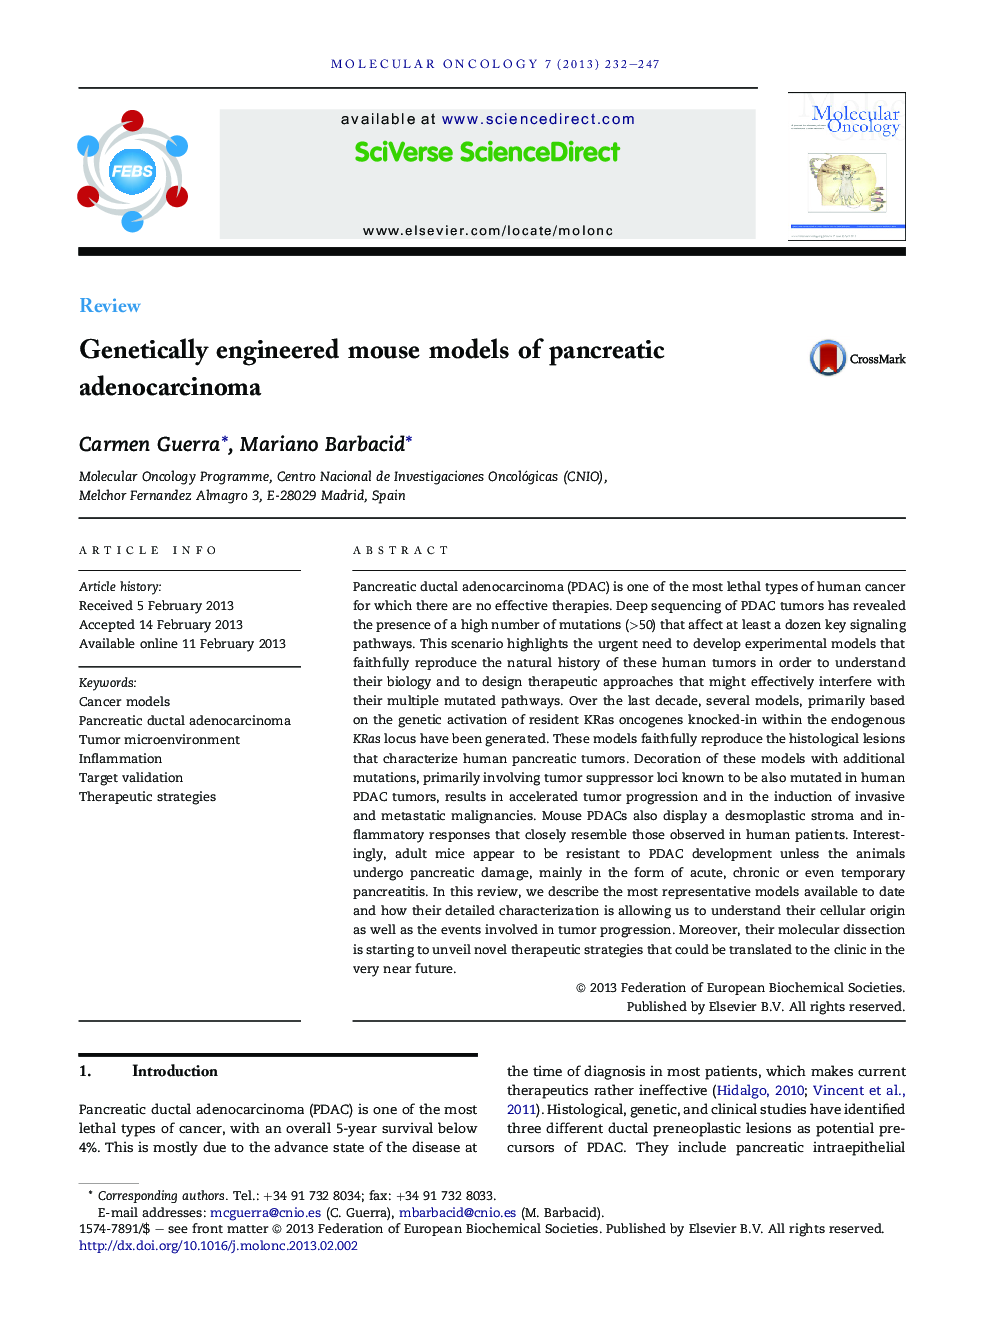 Genetically engineered mouse models of pancreatic adenocarcinoma